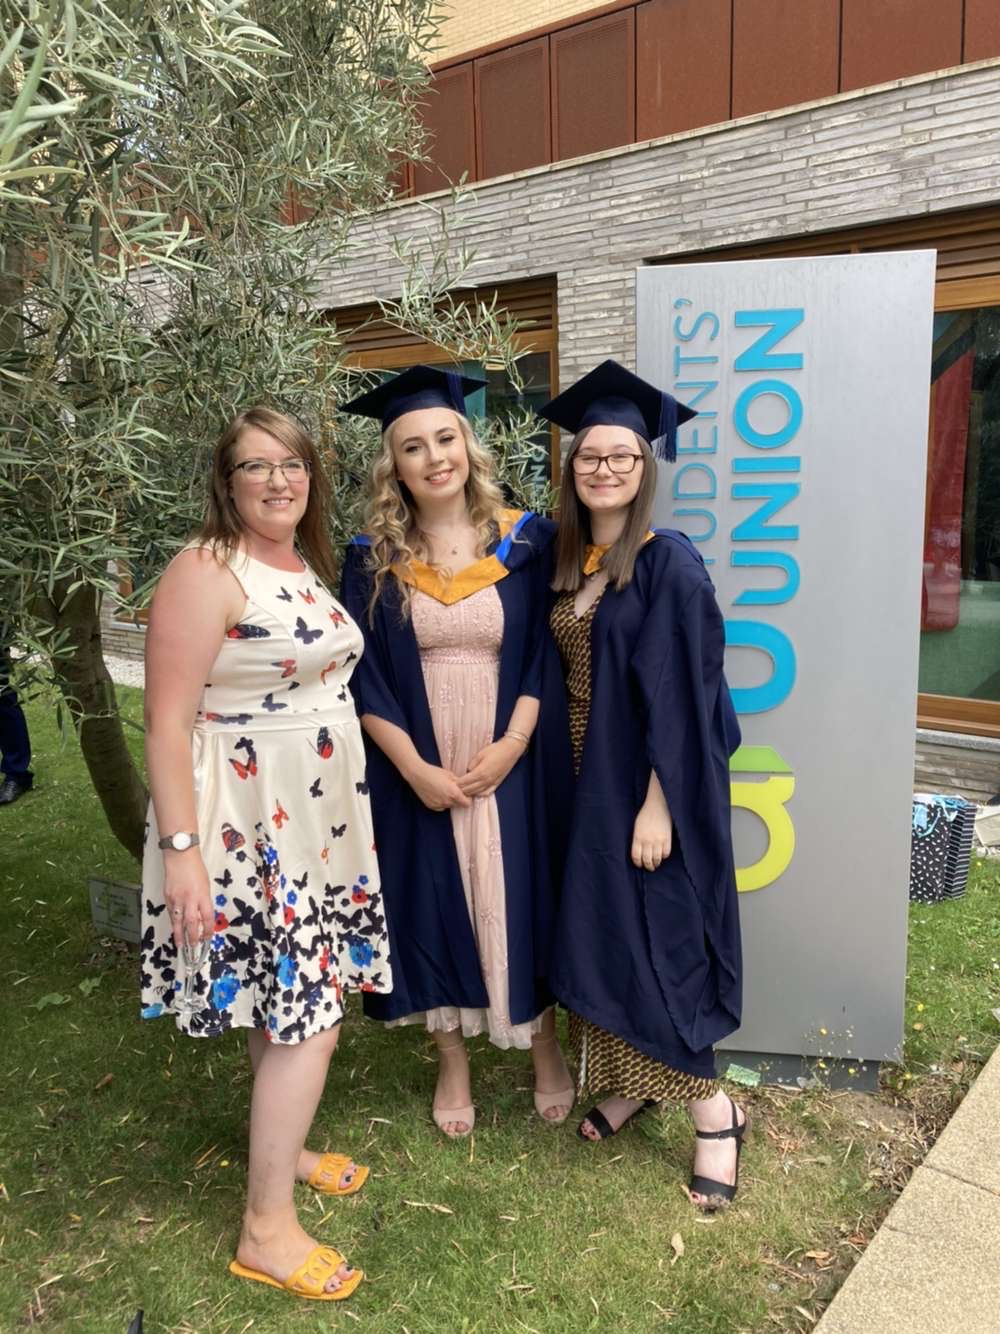 Three women, two wearing graduation gowns